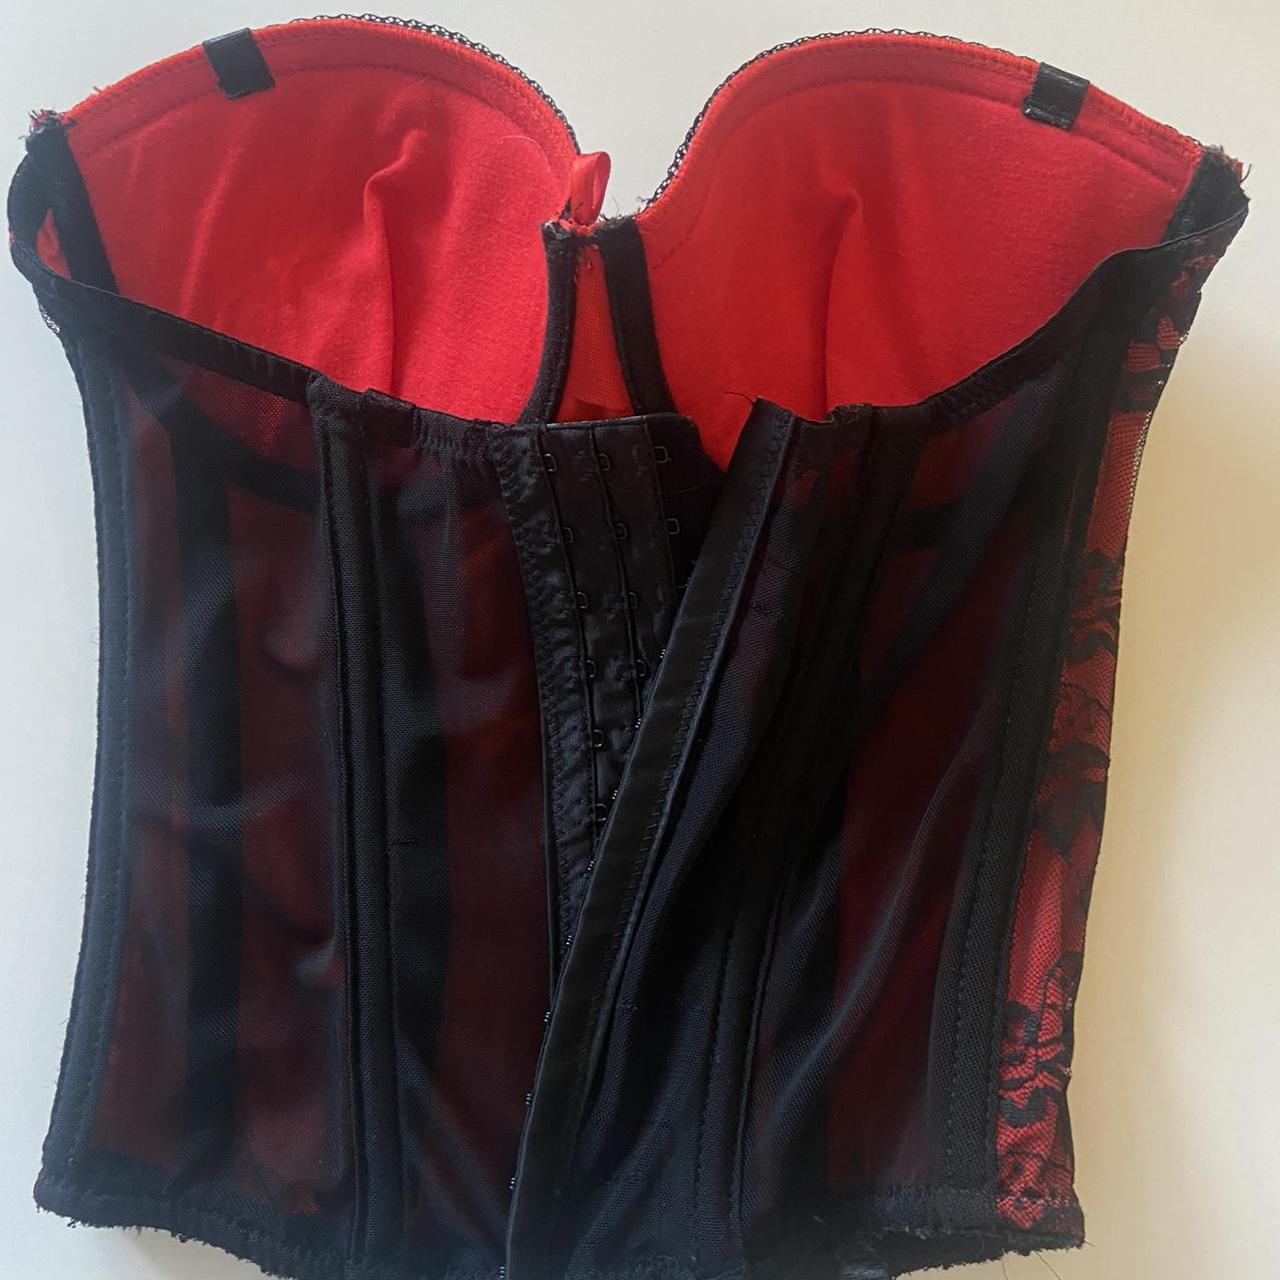 BB Lingerie Women's Red and Black Nightwear (2)